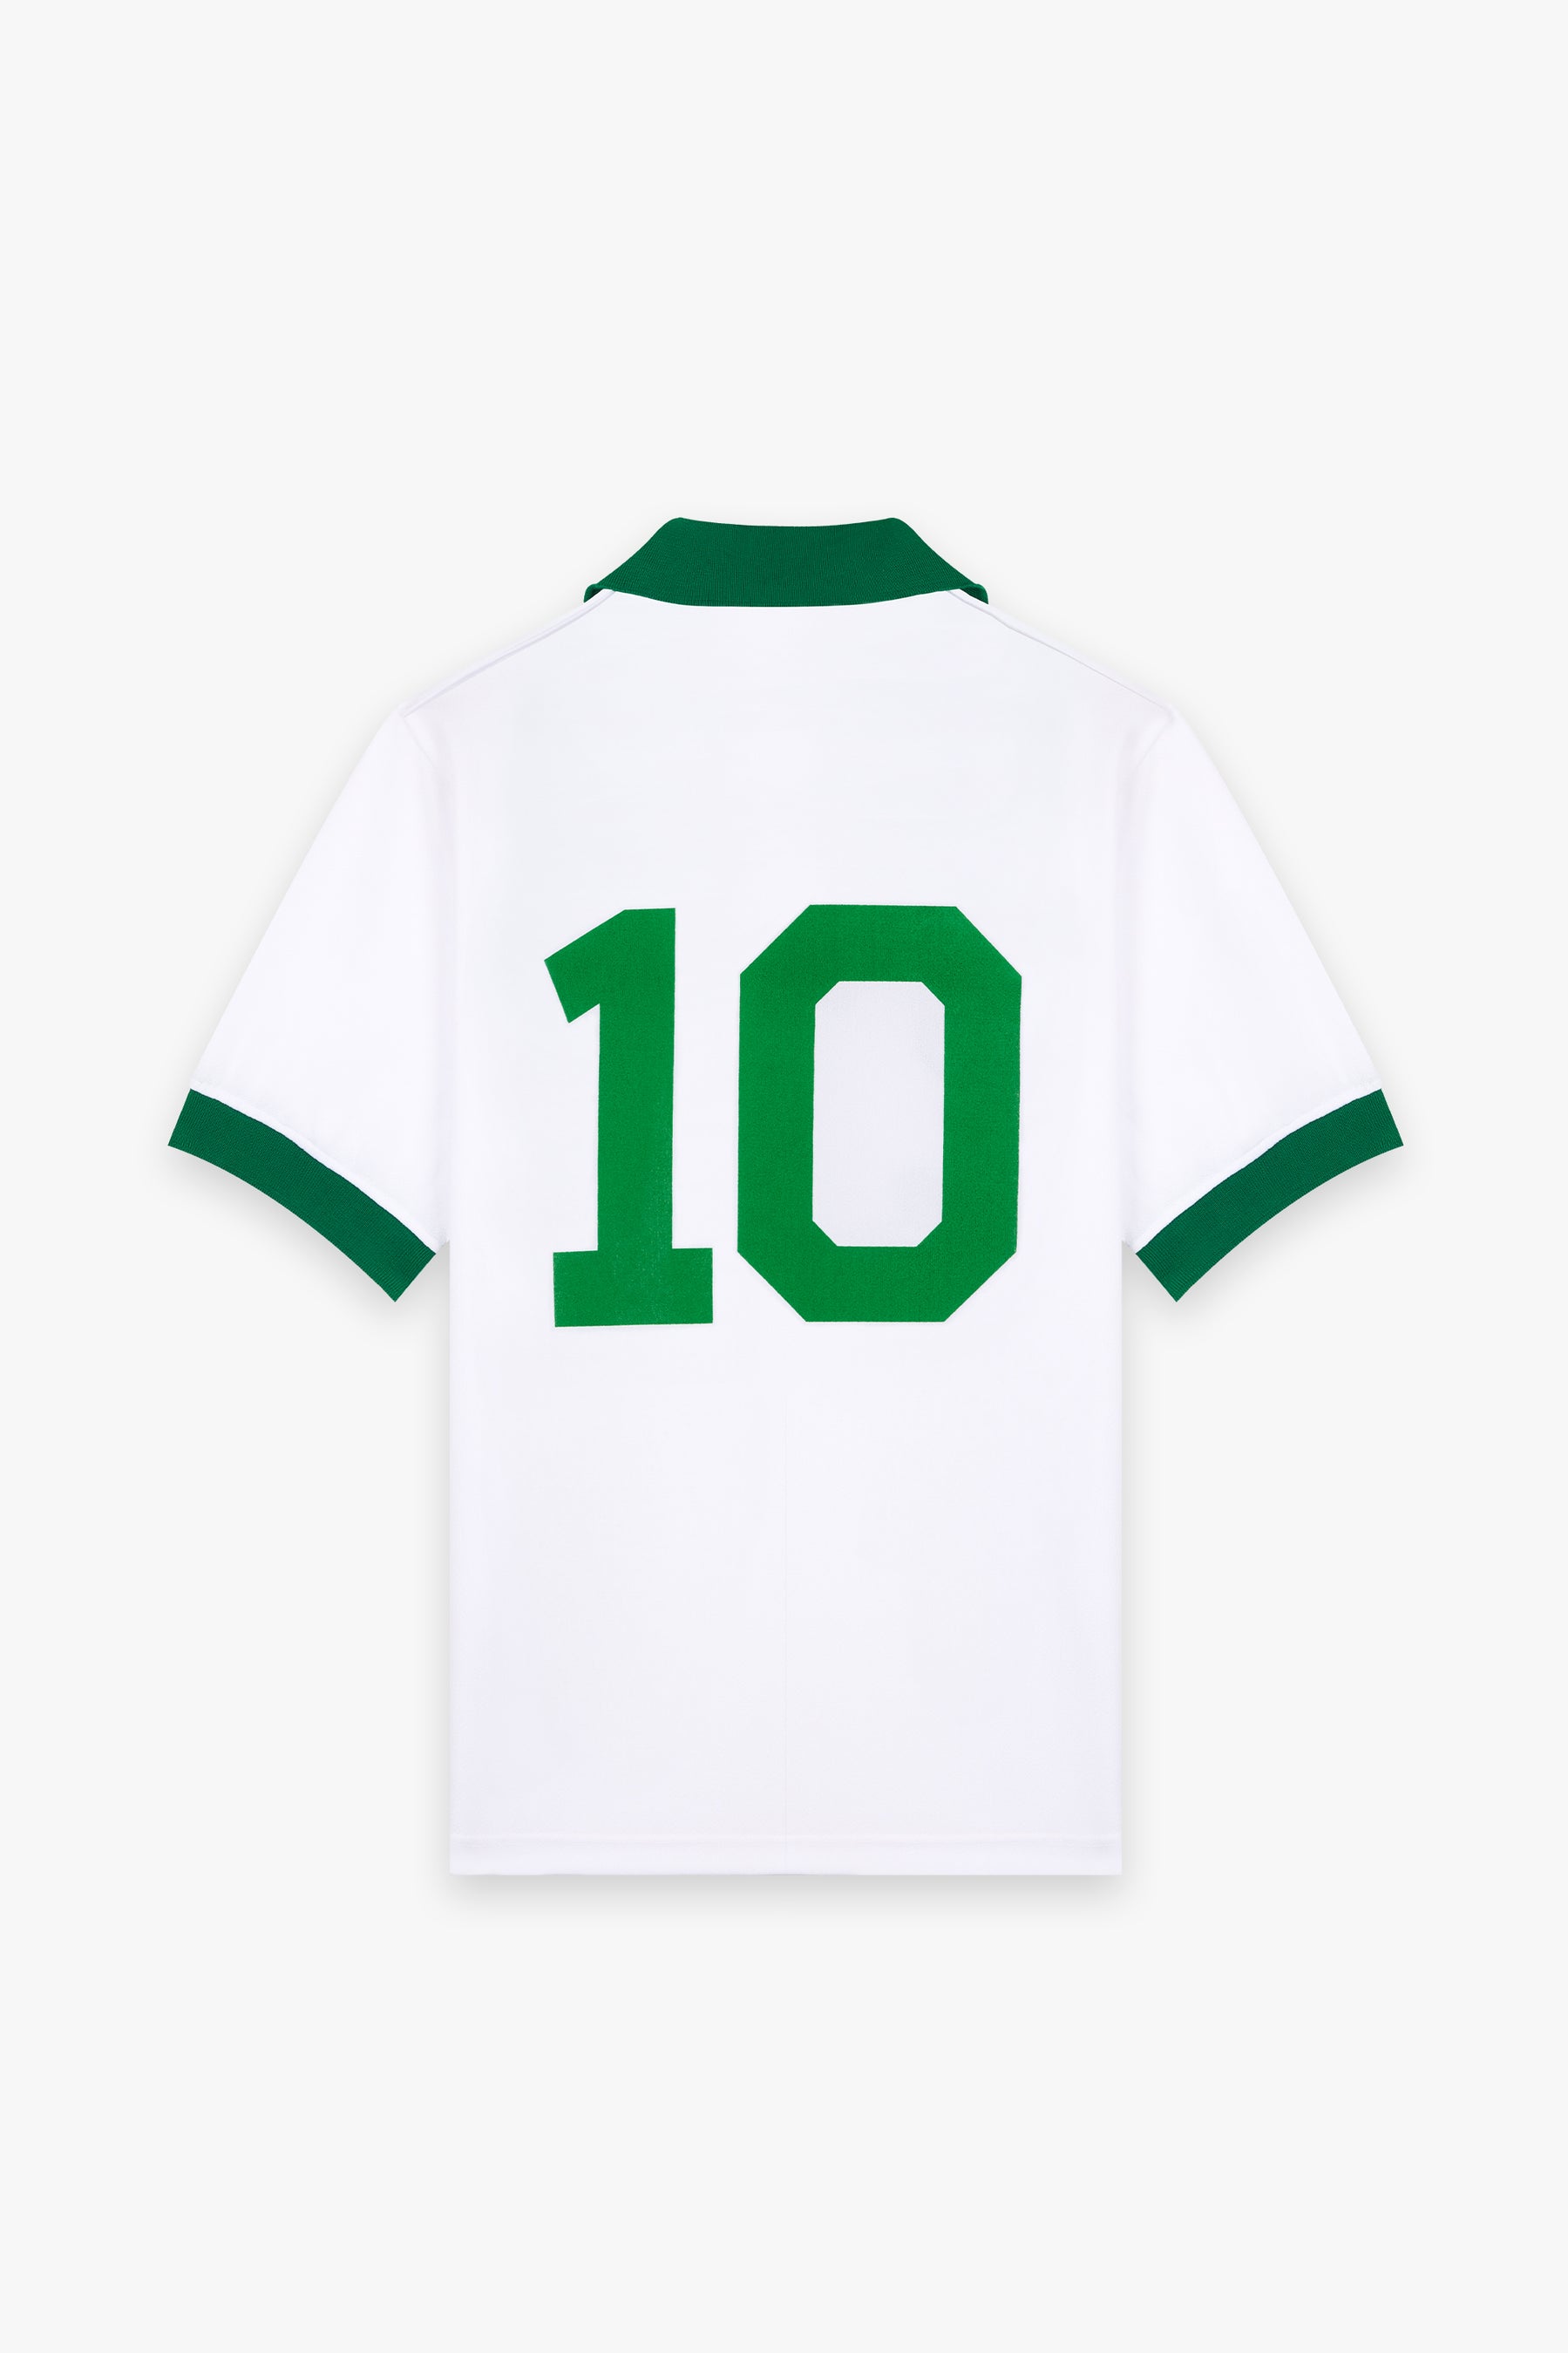 Kalakuta FC jersey Nigeria